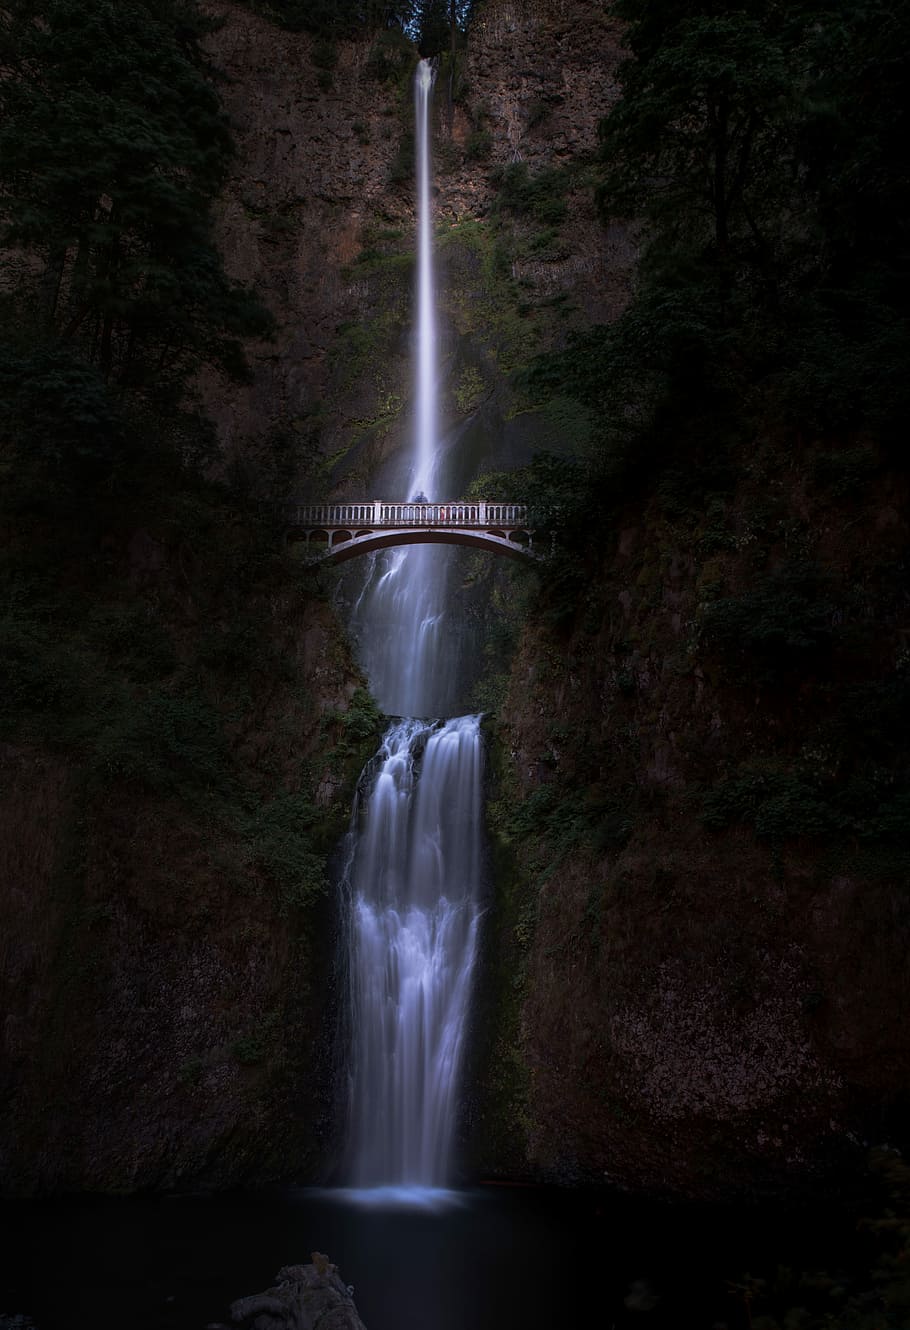 bridge near waterfalls at daytime, falls and bridge photo, cascade